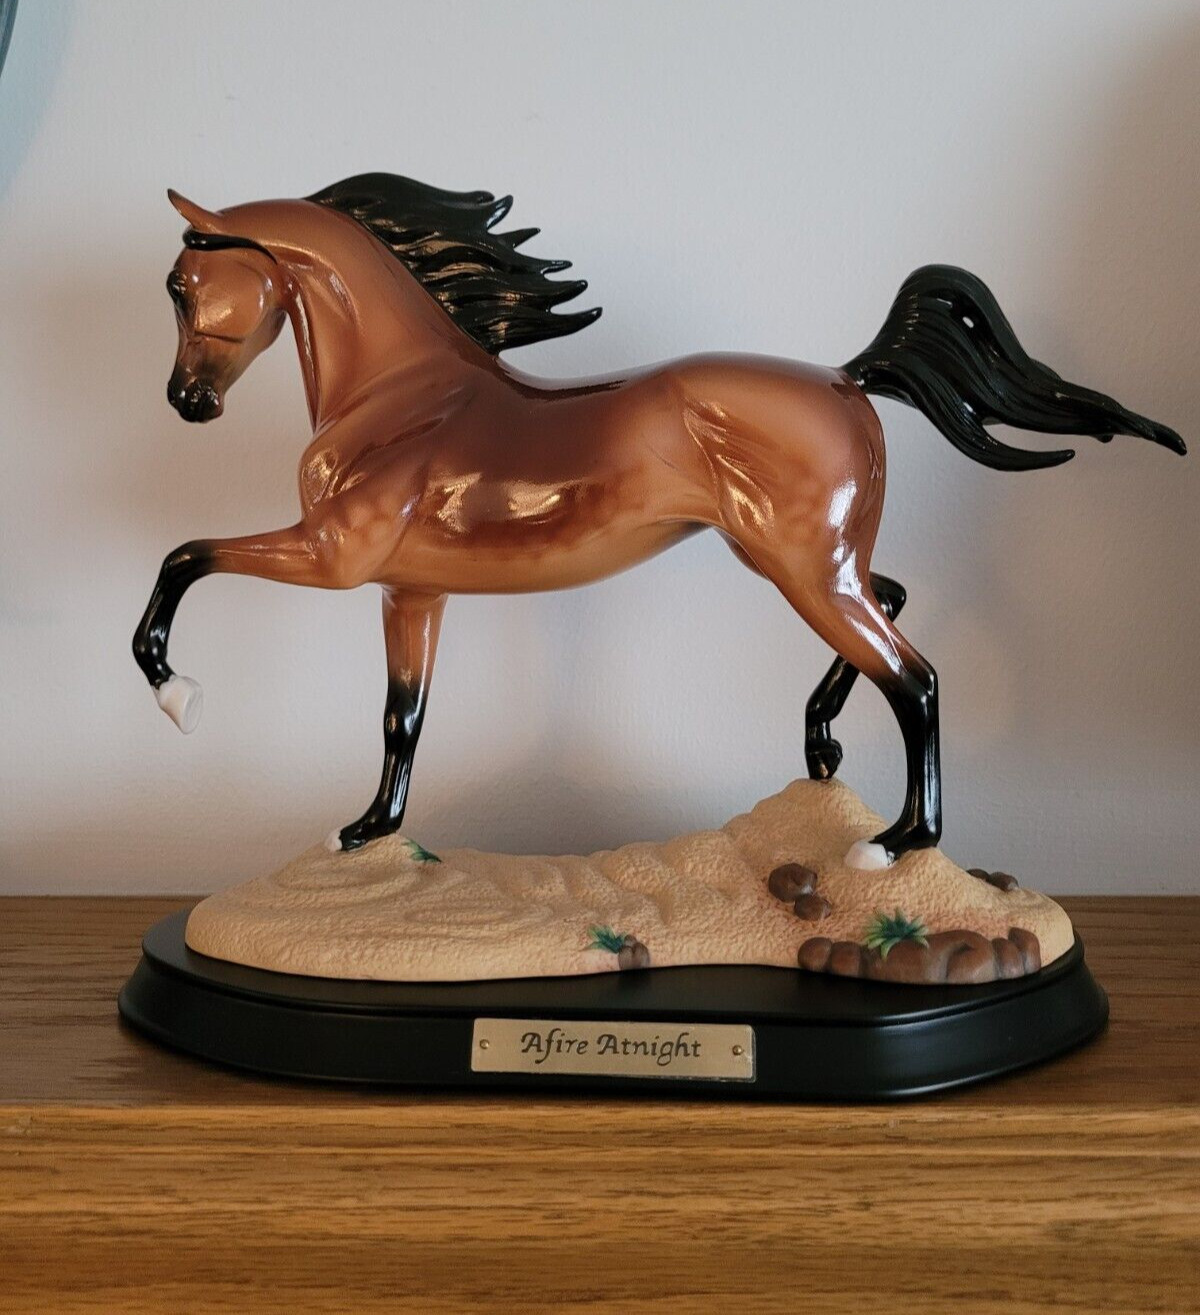 Stunning Breyer porcelain Arabian horse Afire Atnight  COA original box #8145